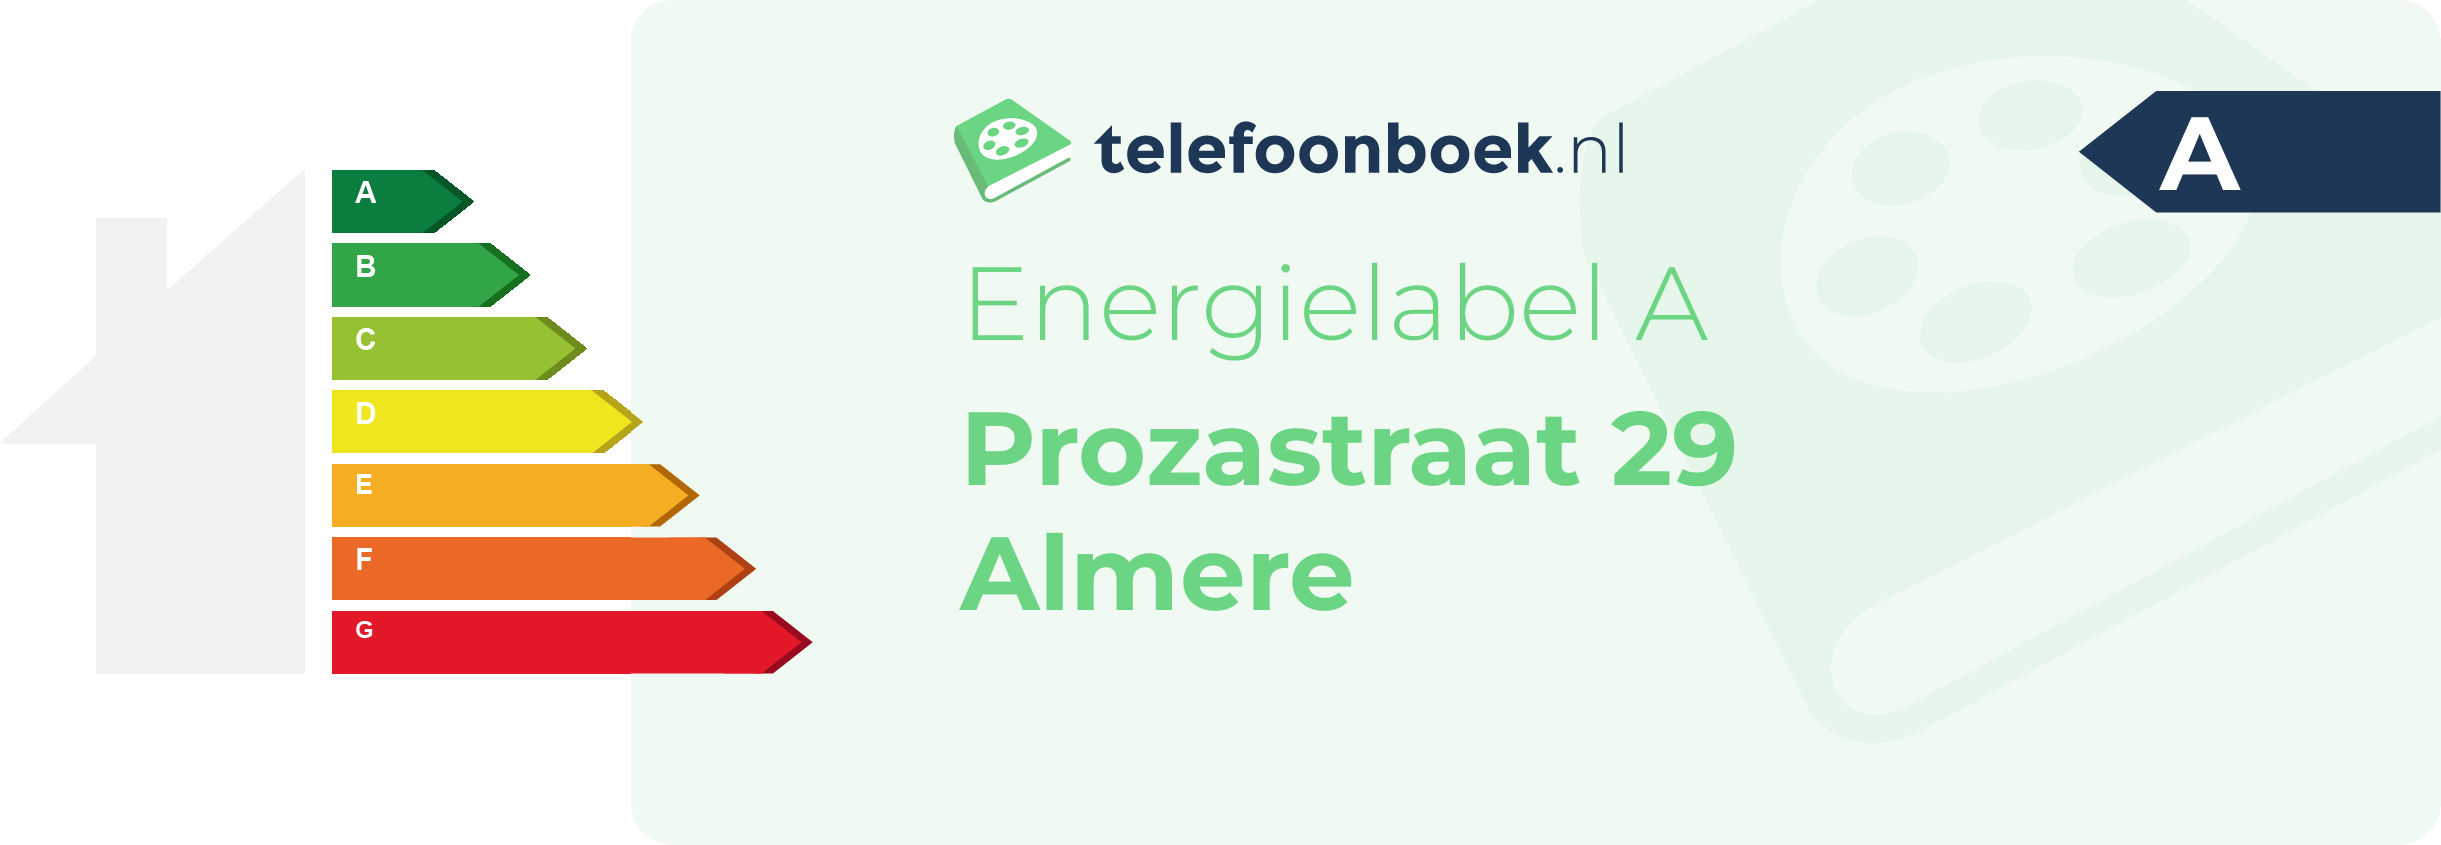 Energielabel Prozastraat 29 Almere